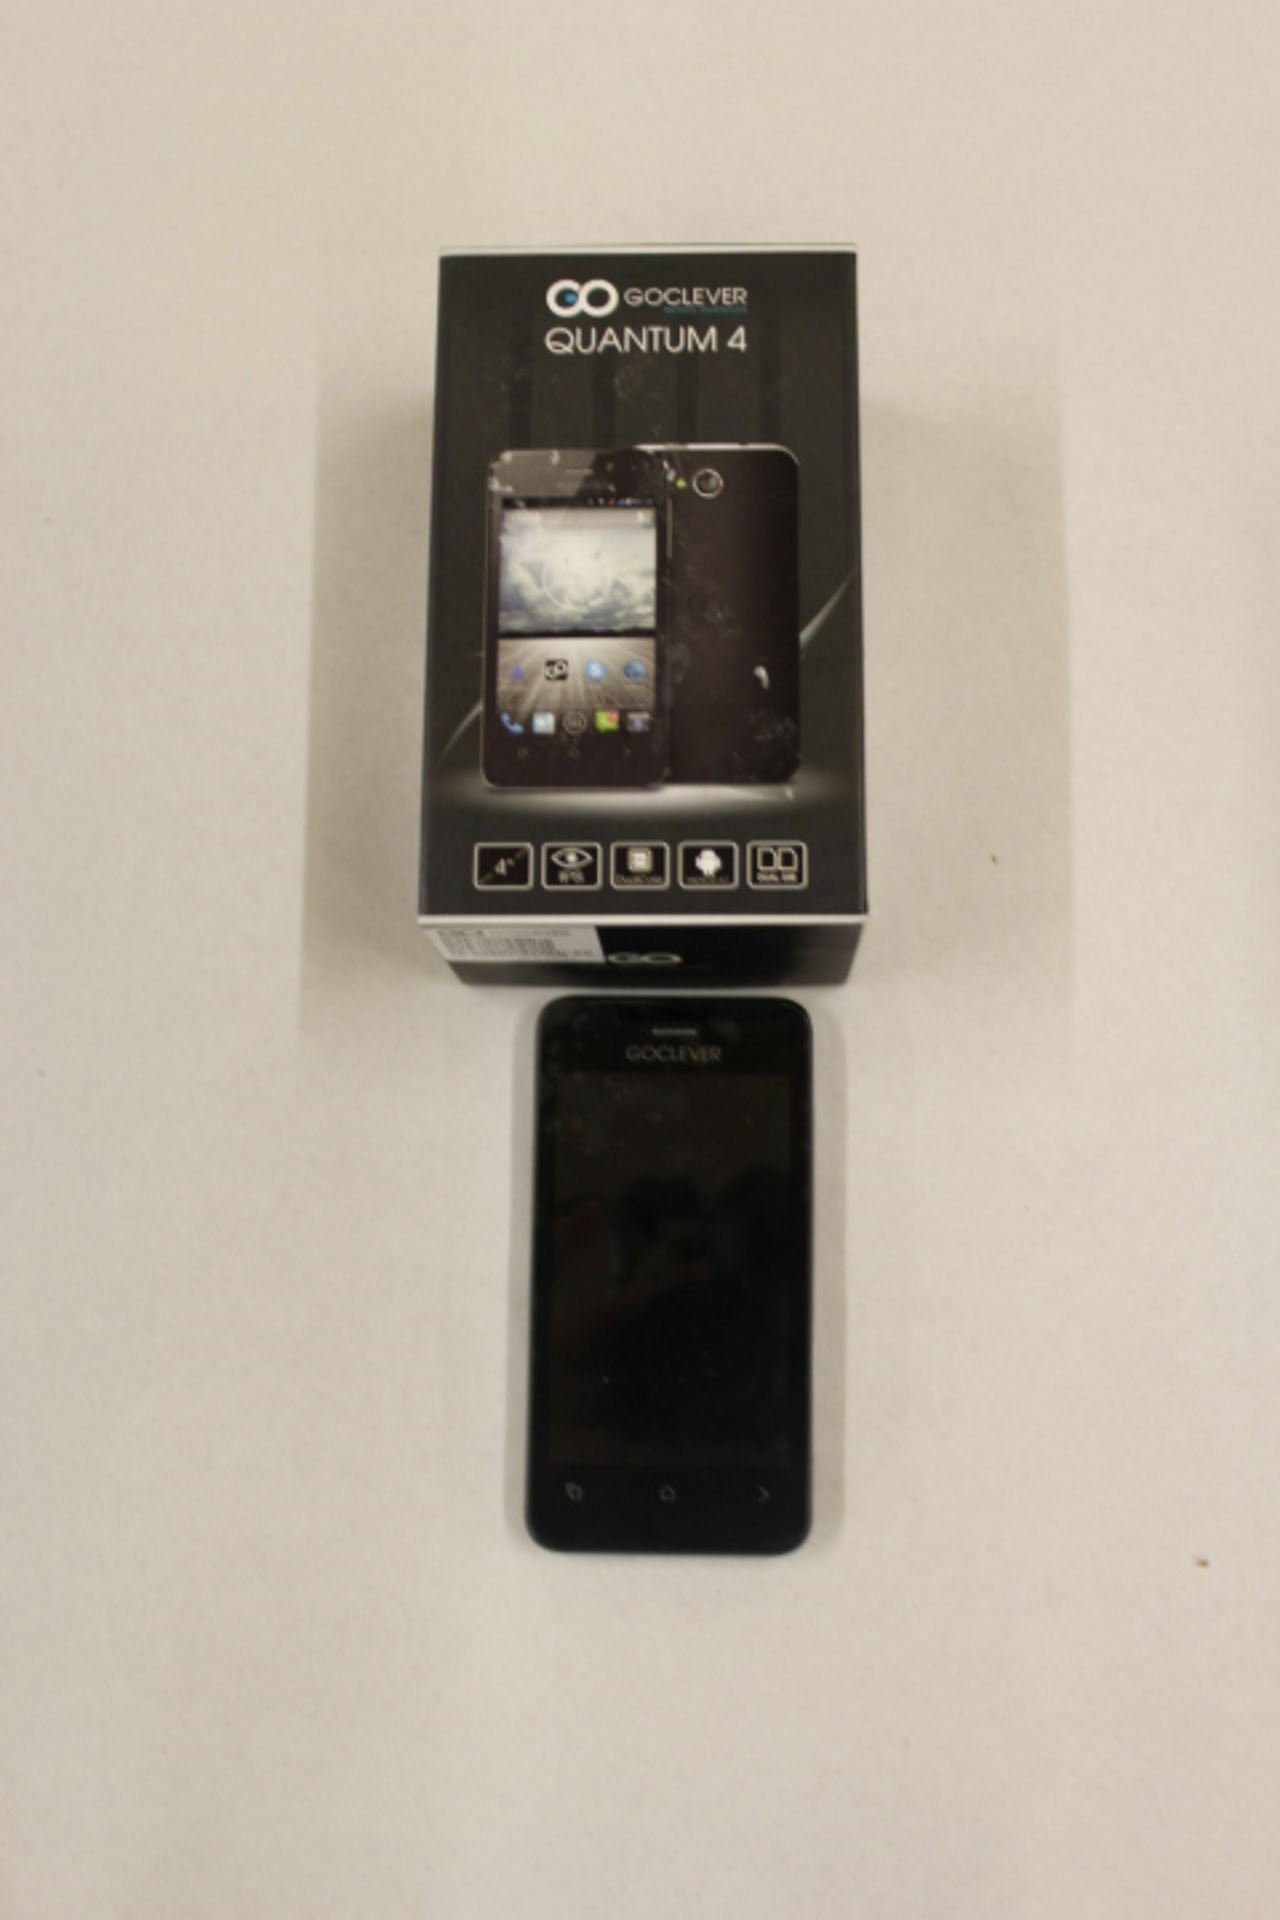 V GOCLEVER Quantum 4 4 IPS Android Dual Core A9 Dual Sim 2 Cameras BT Black RRP £129 - (Customer